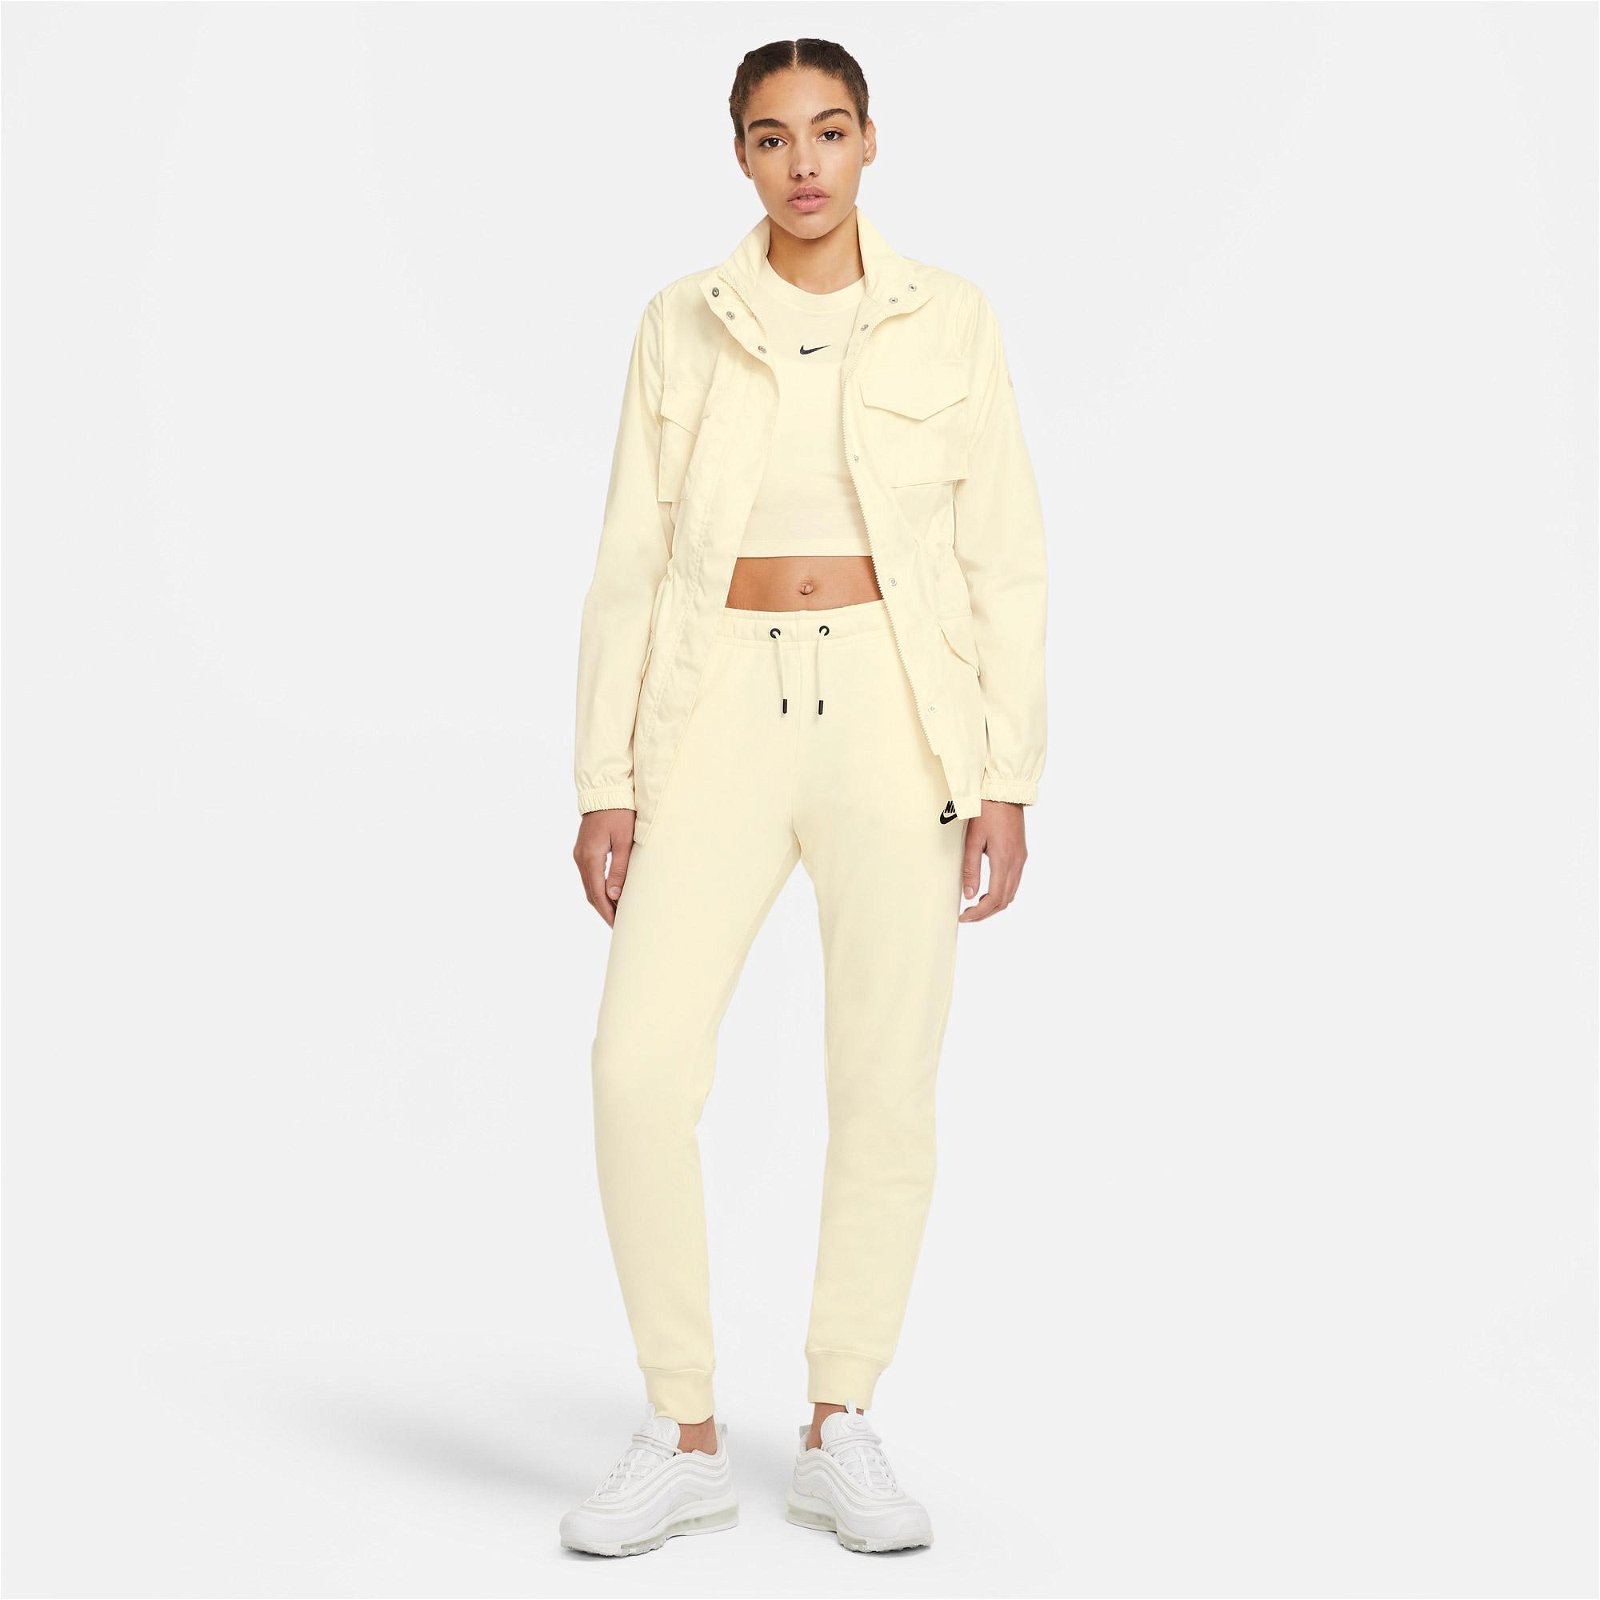 Nike Sportswear Clctn Ess M65 Woven Kadın Beyaz Ceket